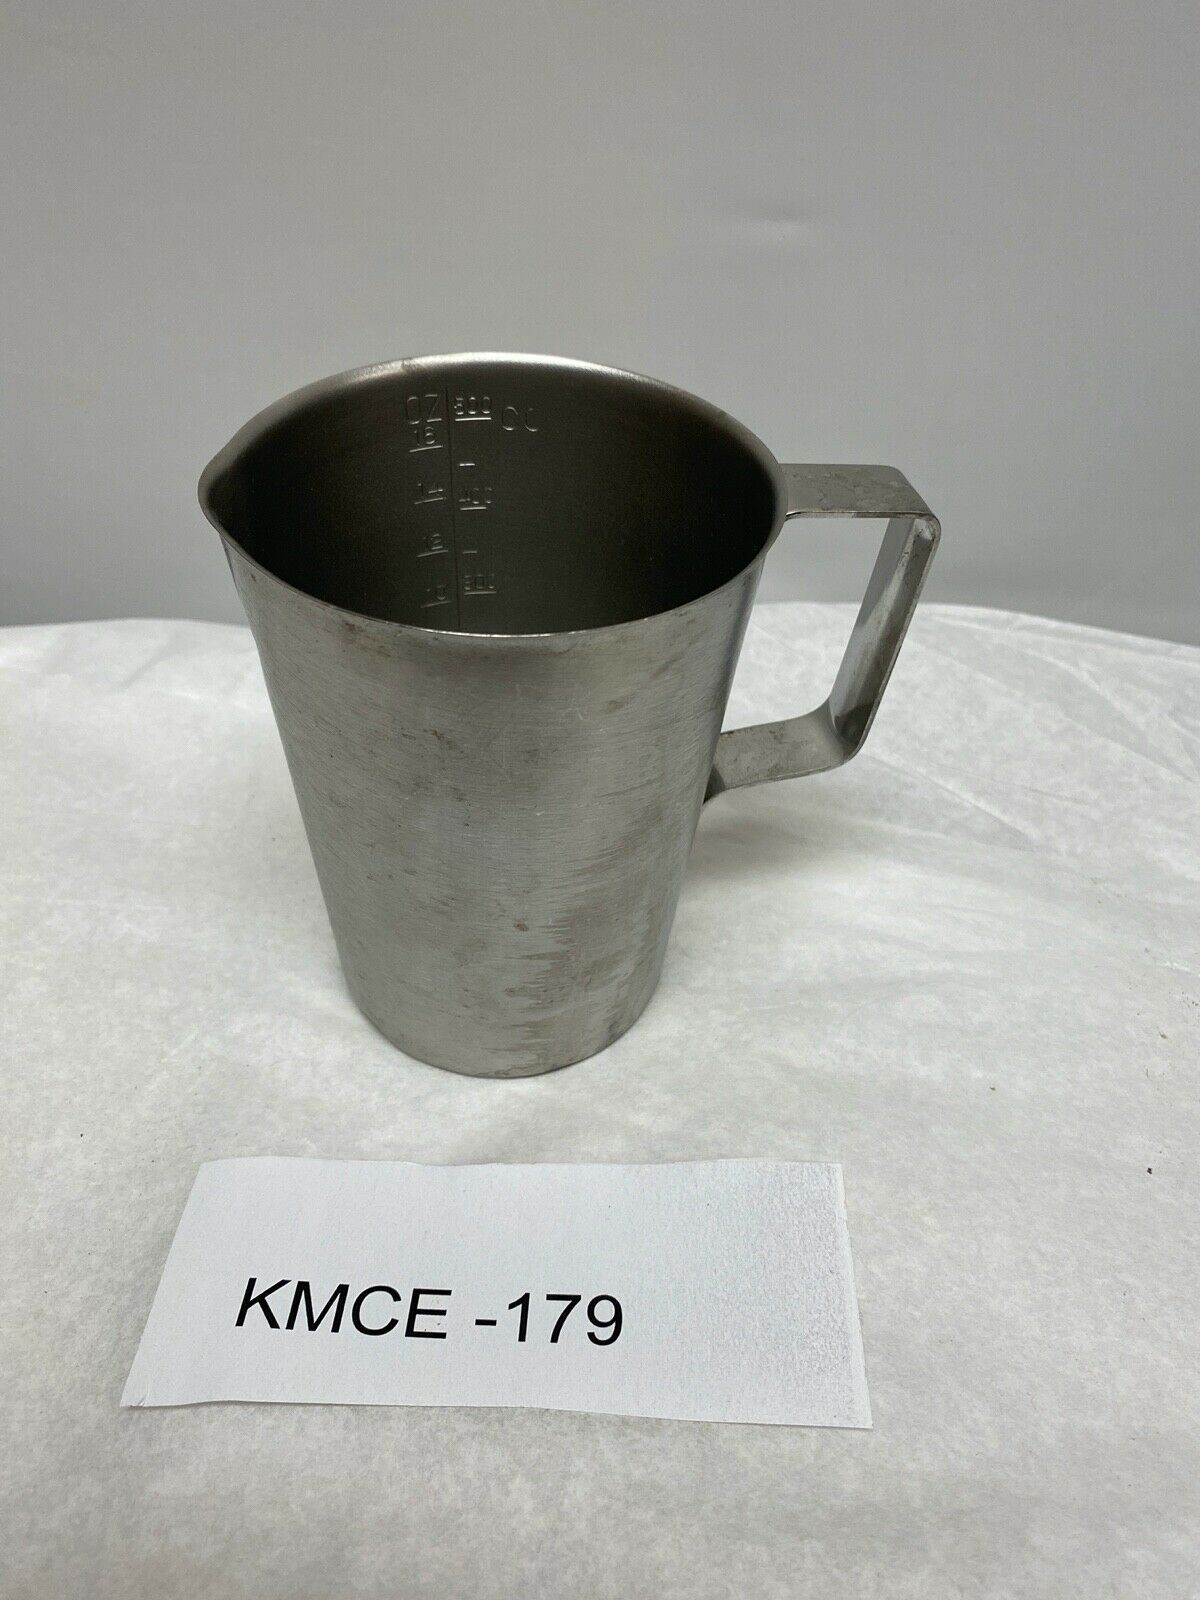 16 Oz. Medical Measuring Cup 4" x 2" | KMCE-179 DIAGNOSTIC ULTRASOUND MACHINES FOR SALE